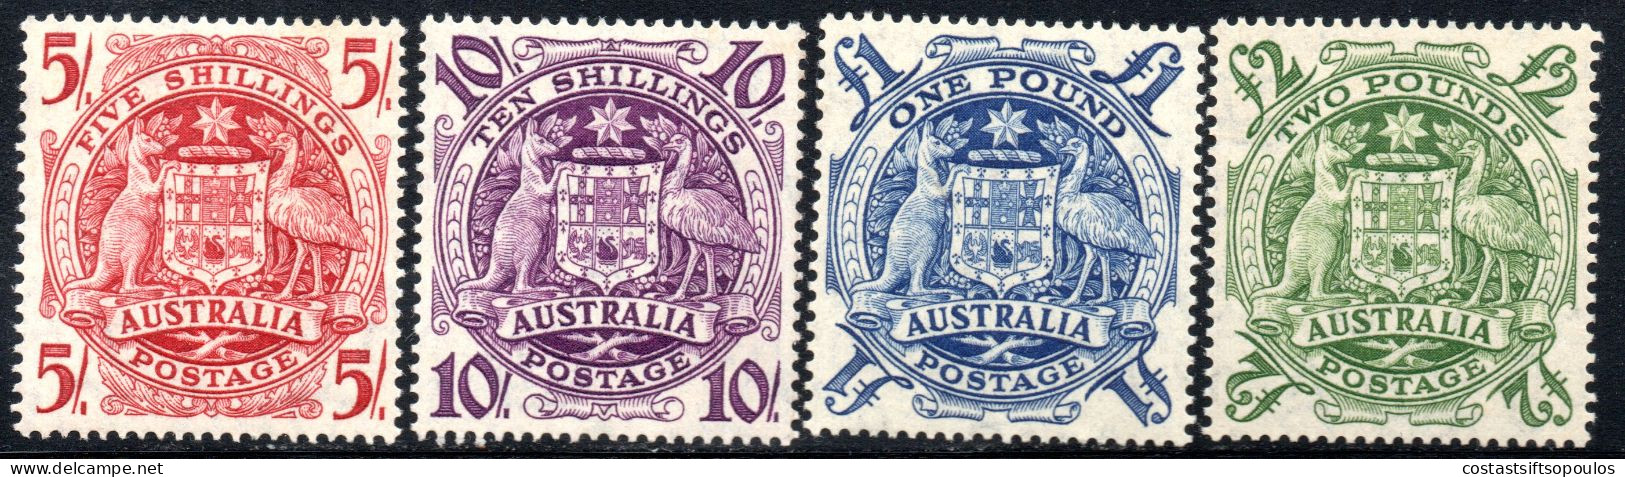 2346. AUSTRALIA 1949-1950 COAT OF ARMS SG.224a-224d MNH - Mint Stamps